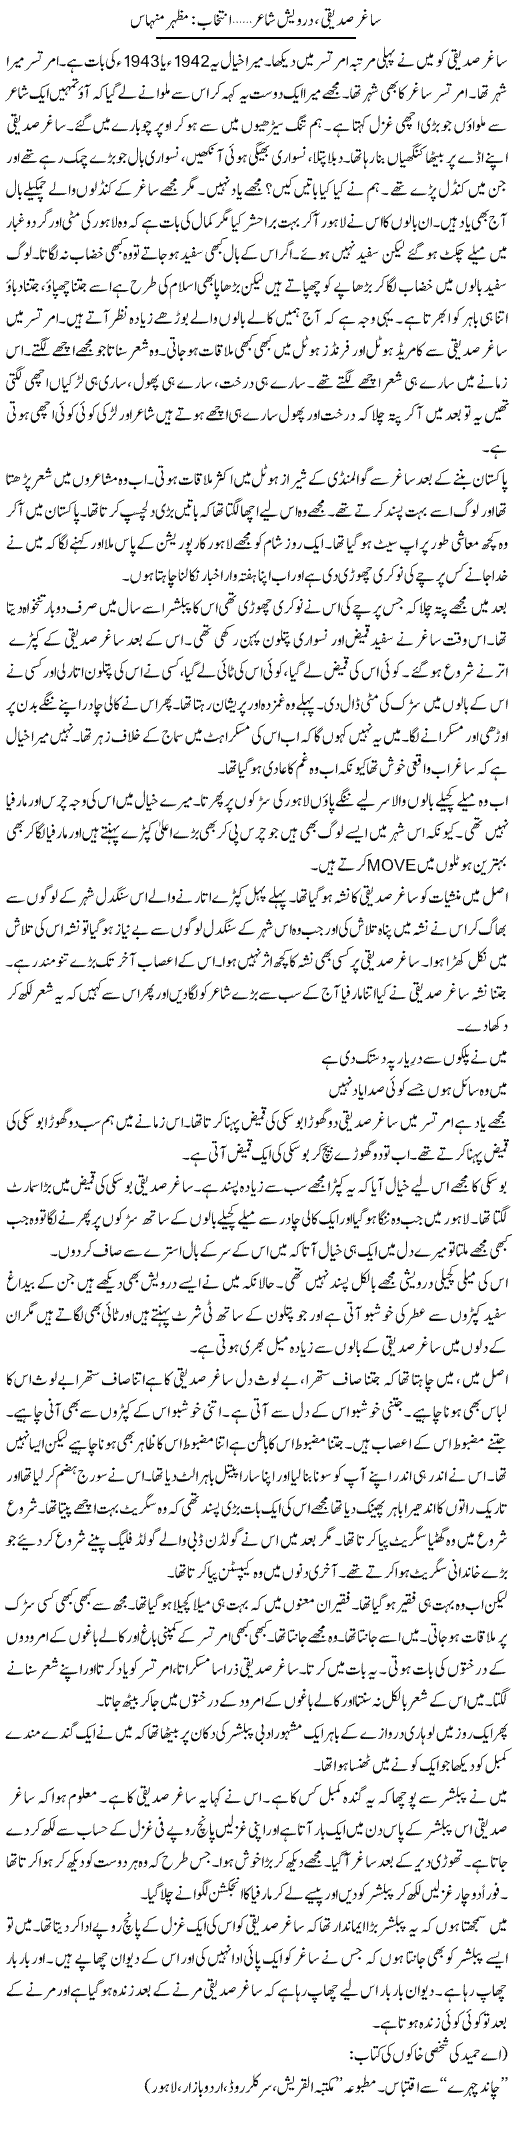 Saghir Siddiqui, Darwaish Shair | Mazhar Minhas | Daily Urdu Columns